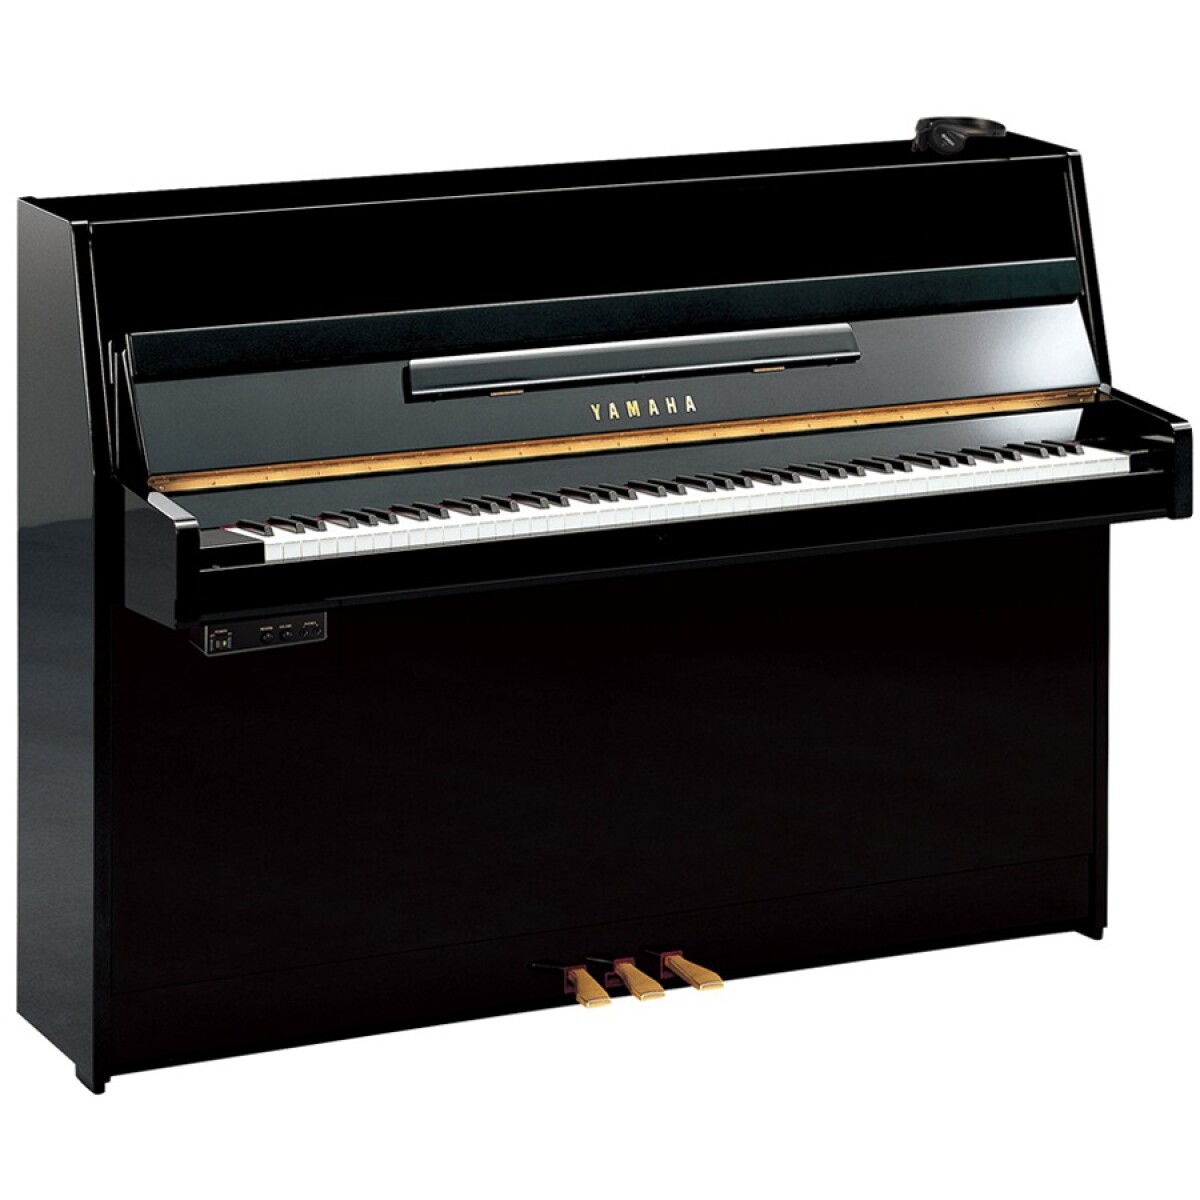 Piano Digital Yamaha Ju109 Silent 